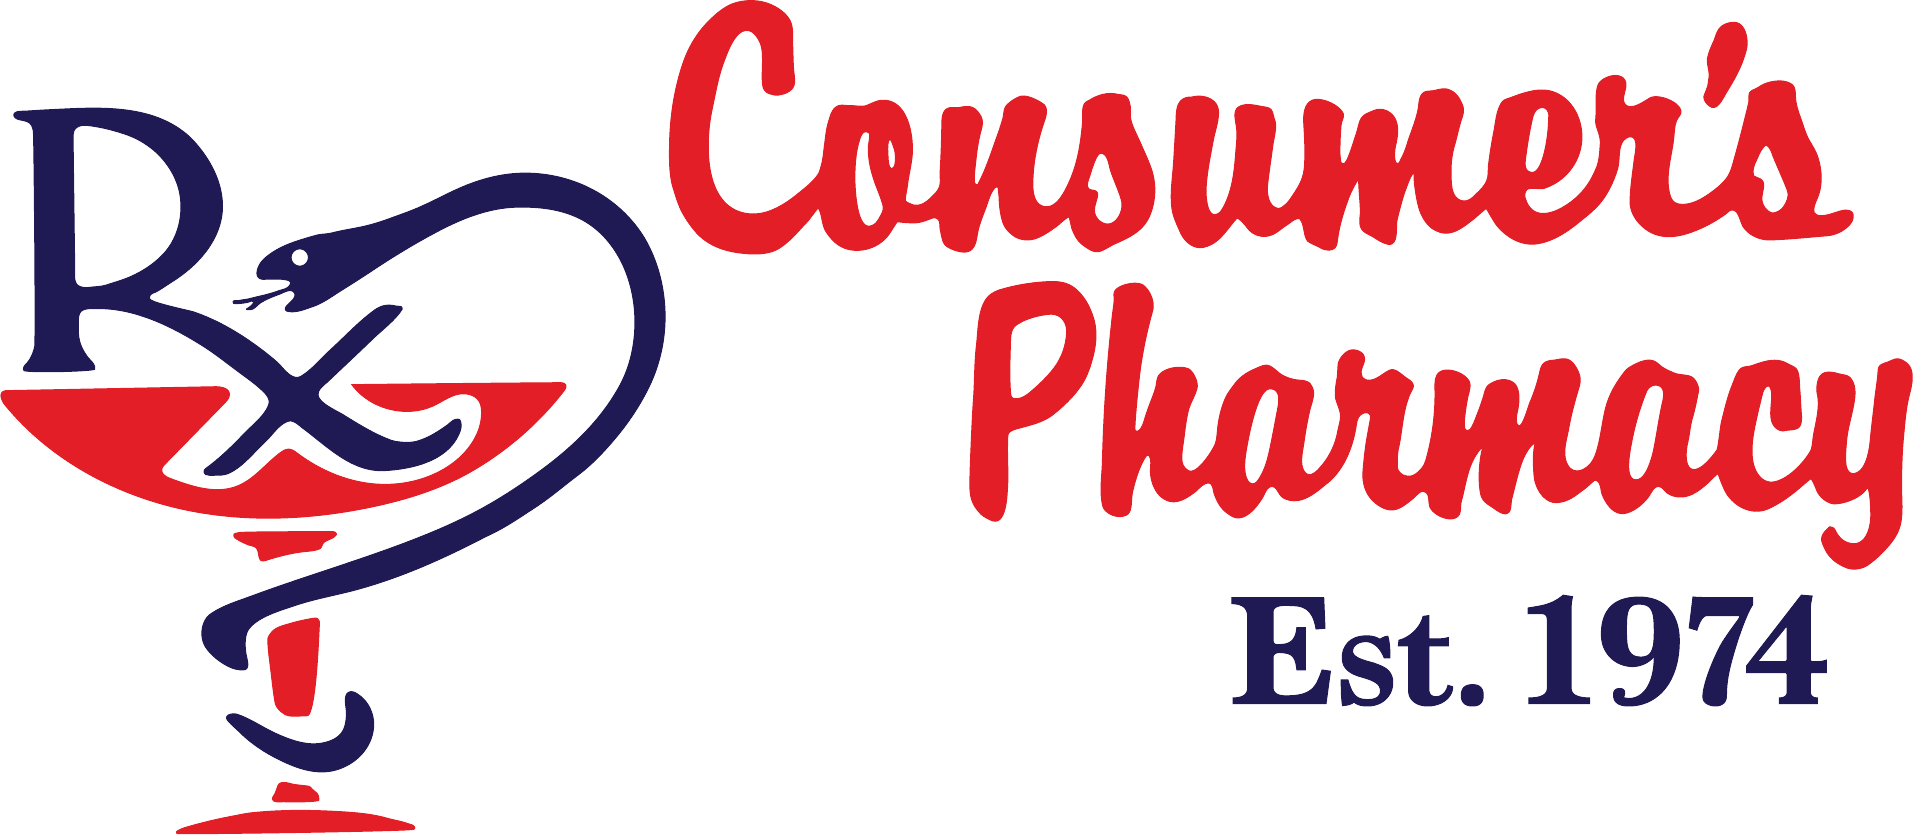 Consumer's Pharmacy